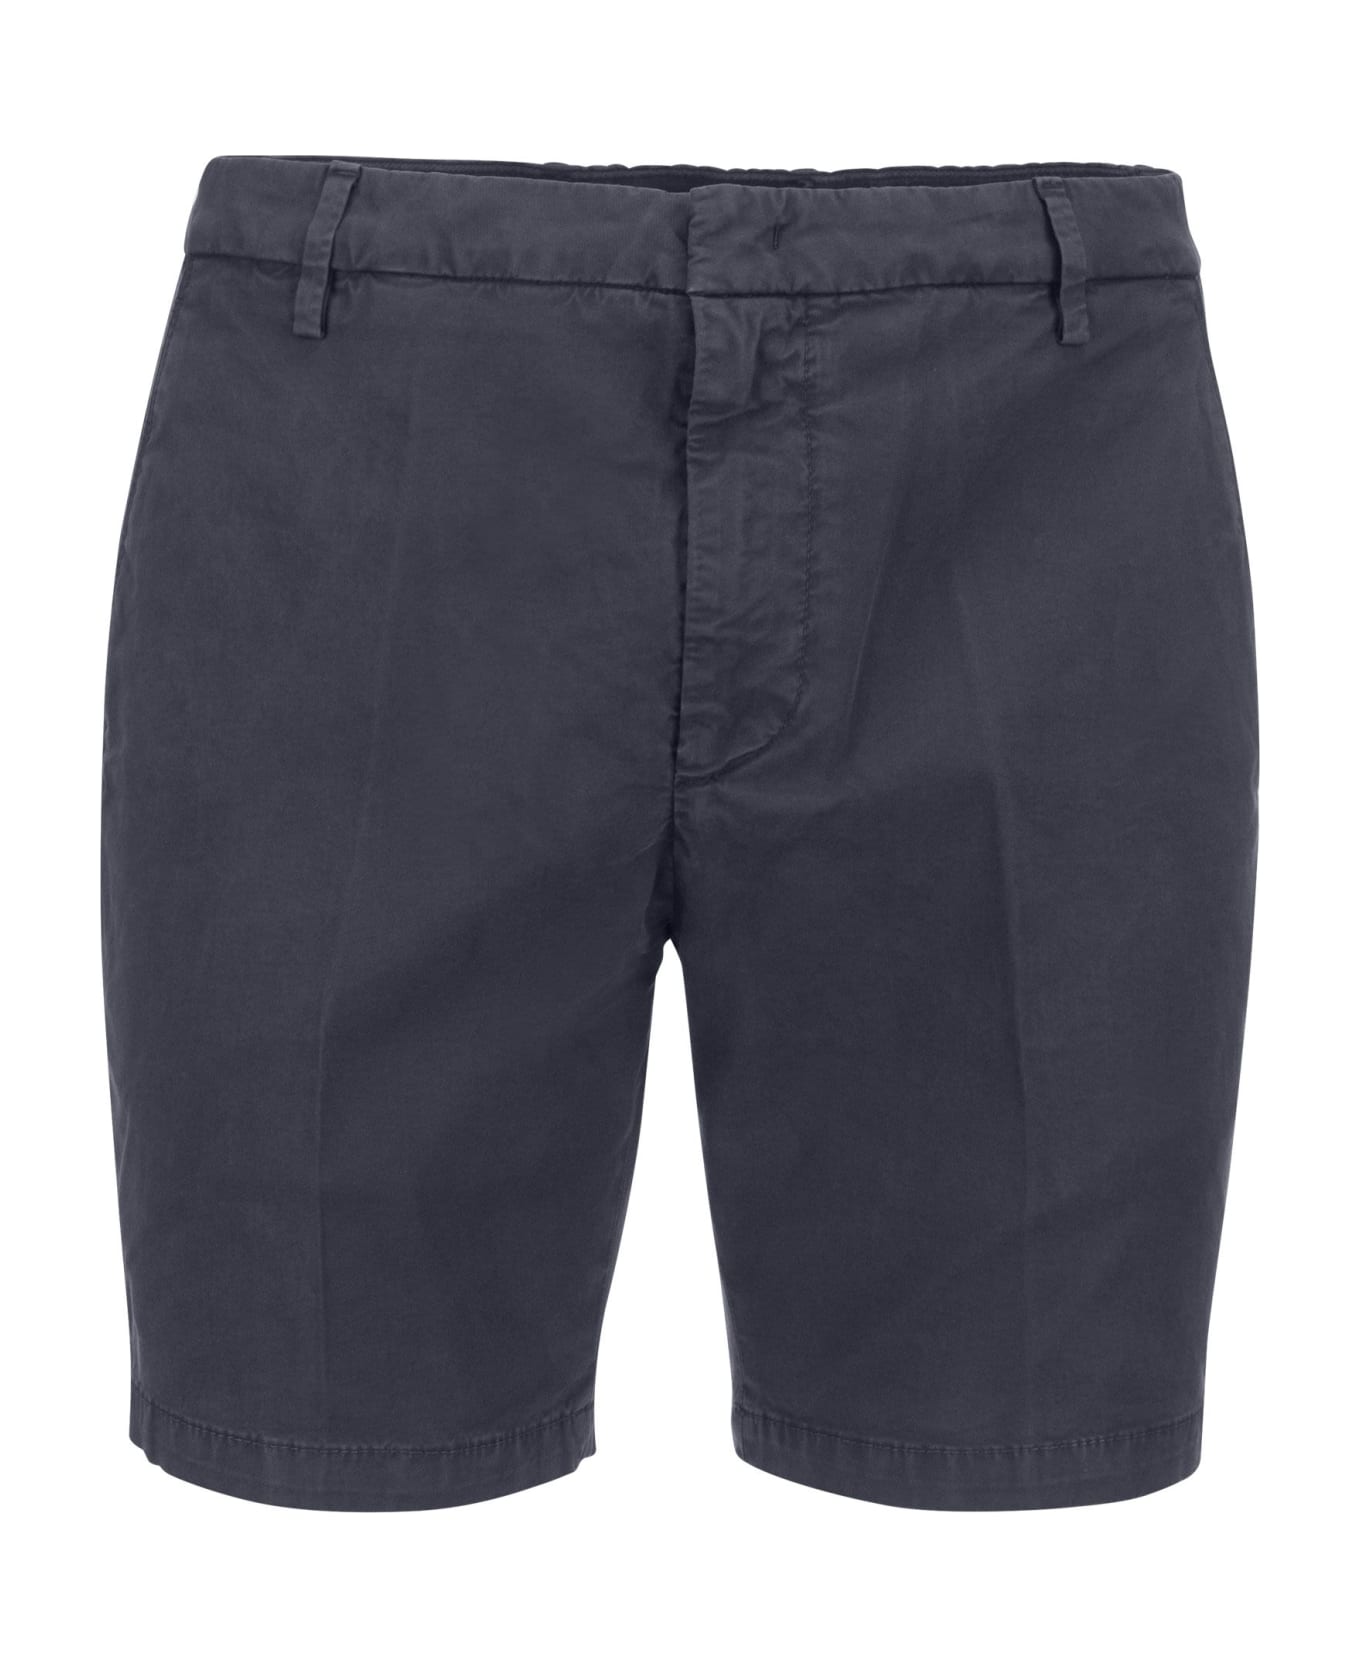 Dondup Manheim - Cotton Blend Shorts - Night Blue